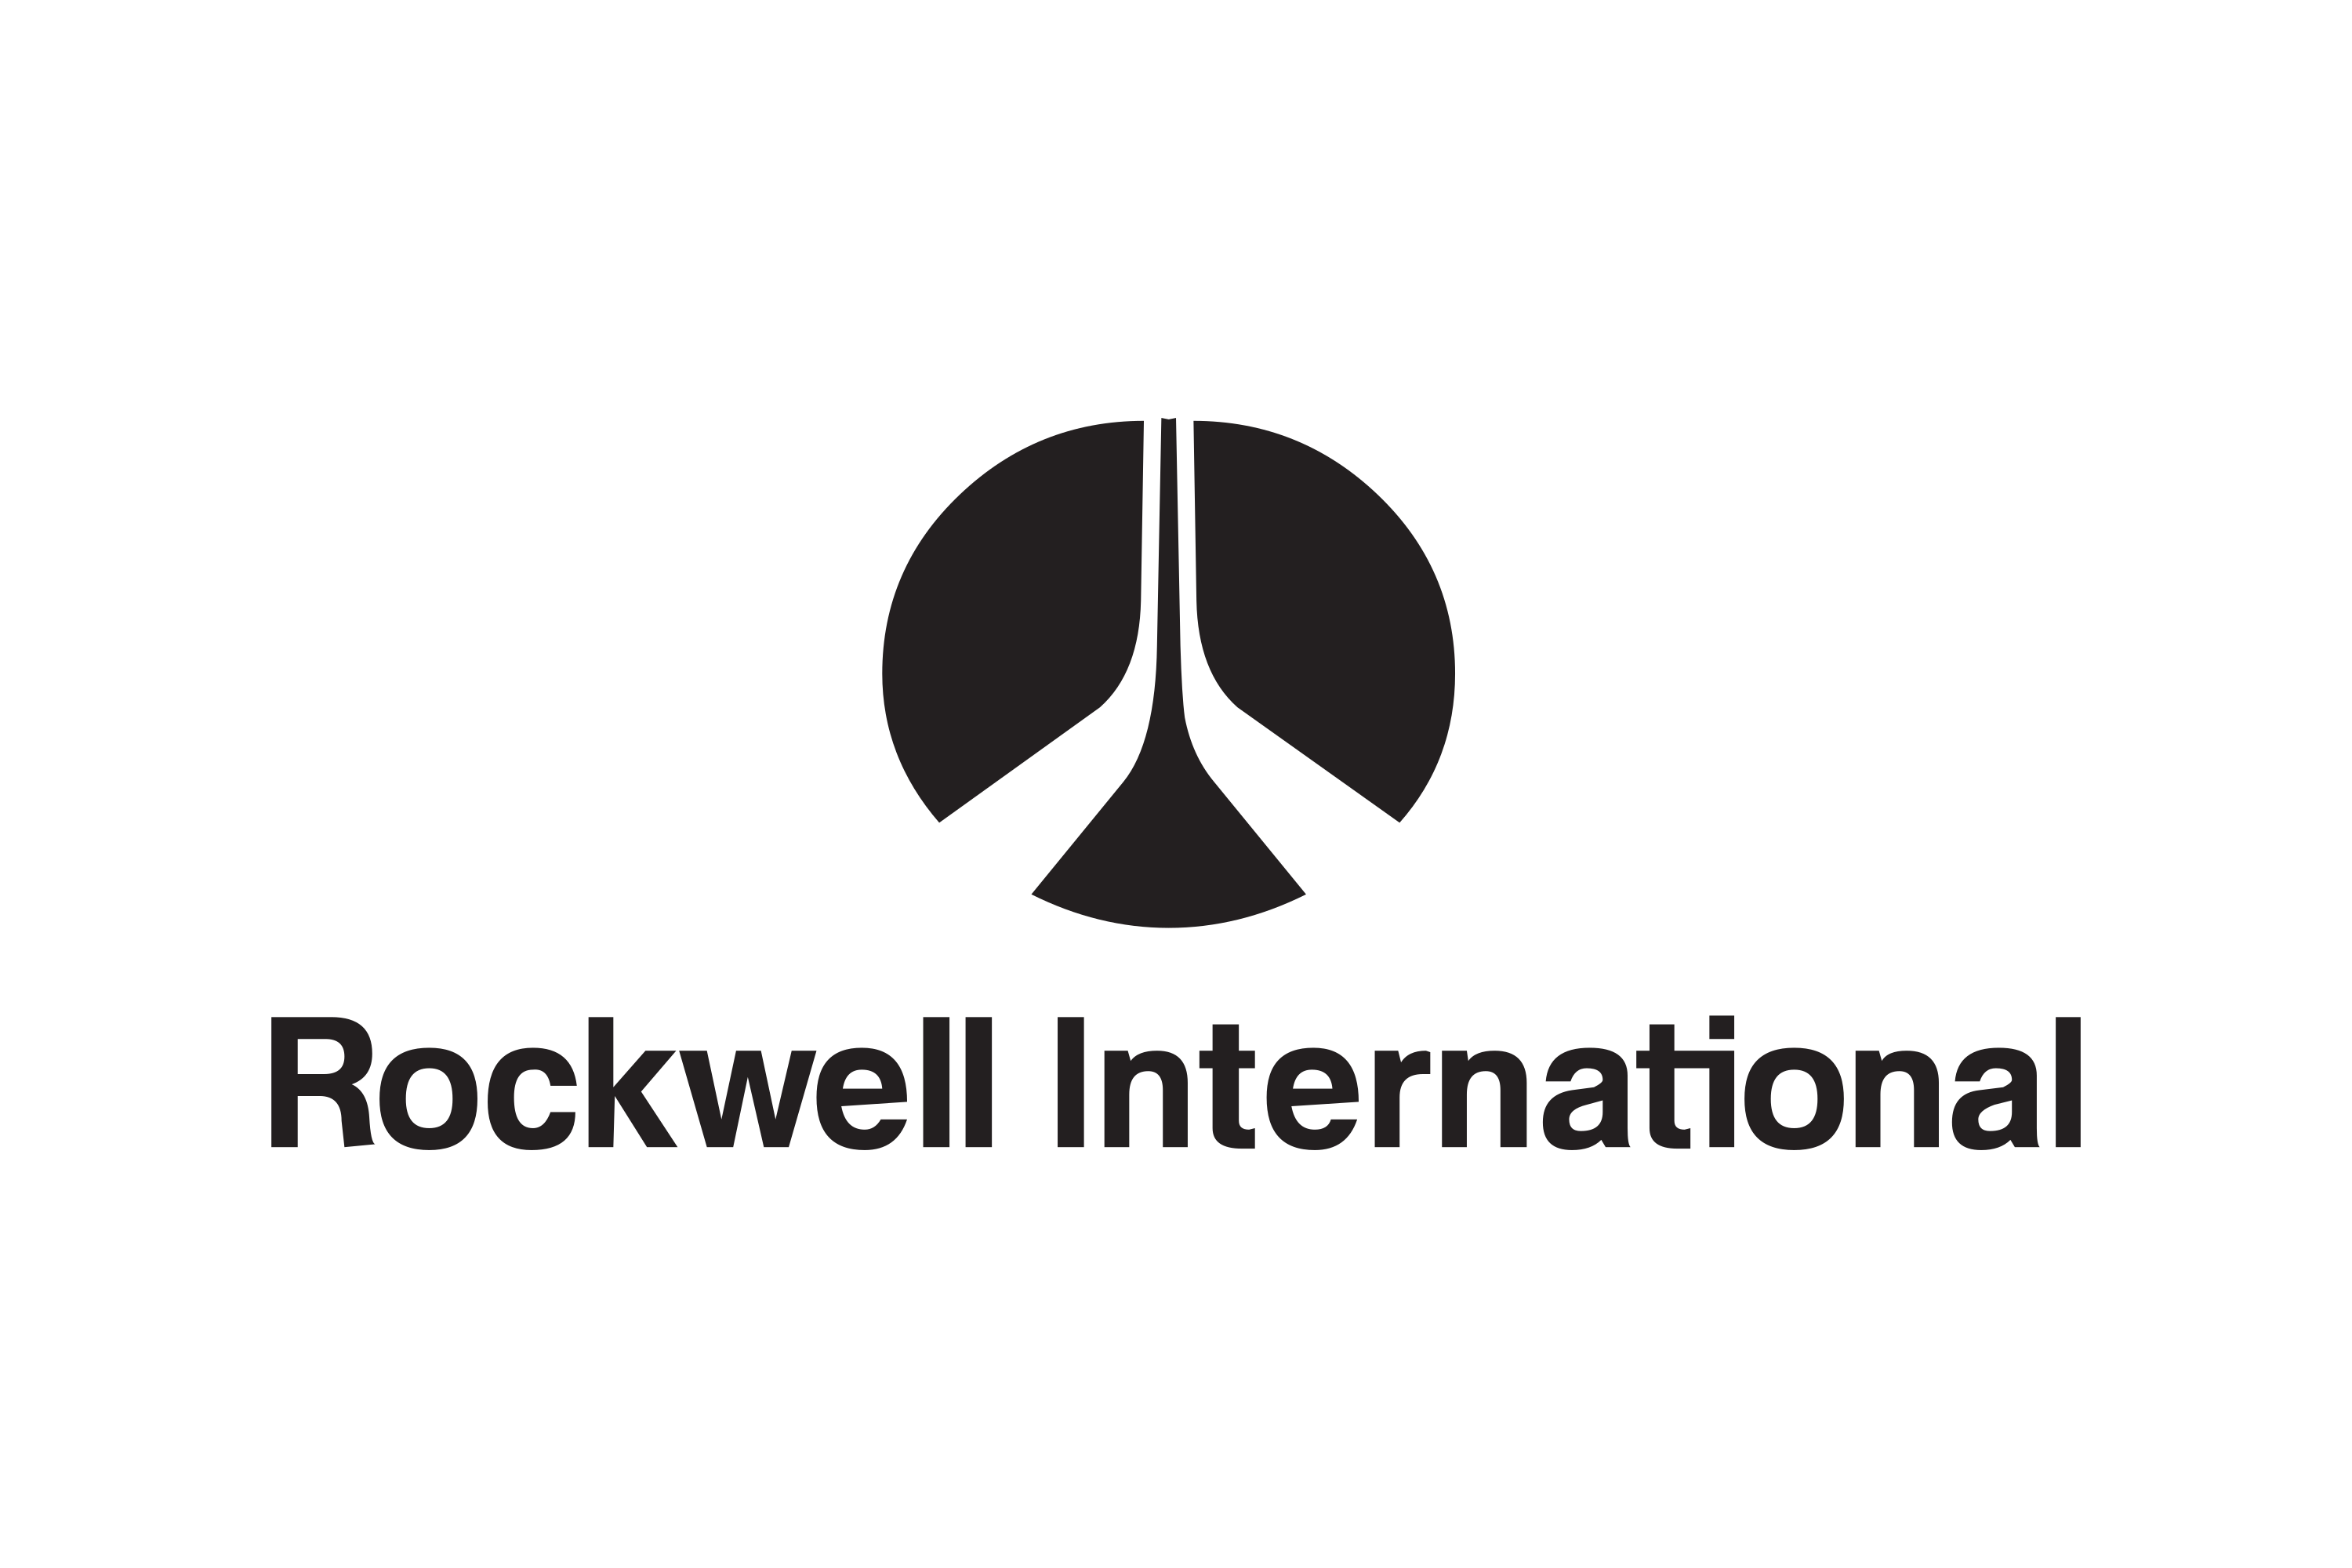 Download Rockwell International Logo in SVG Vector or PNG File Format ...